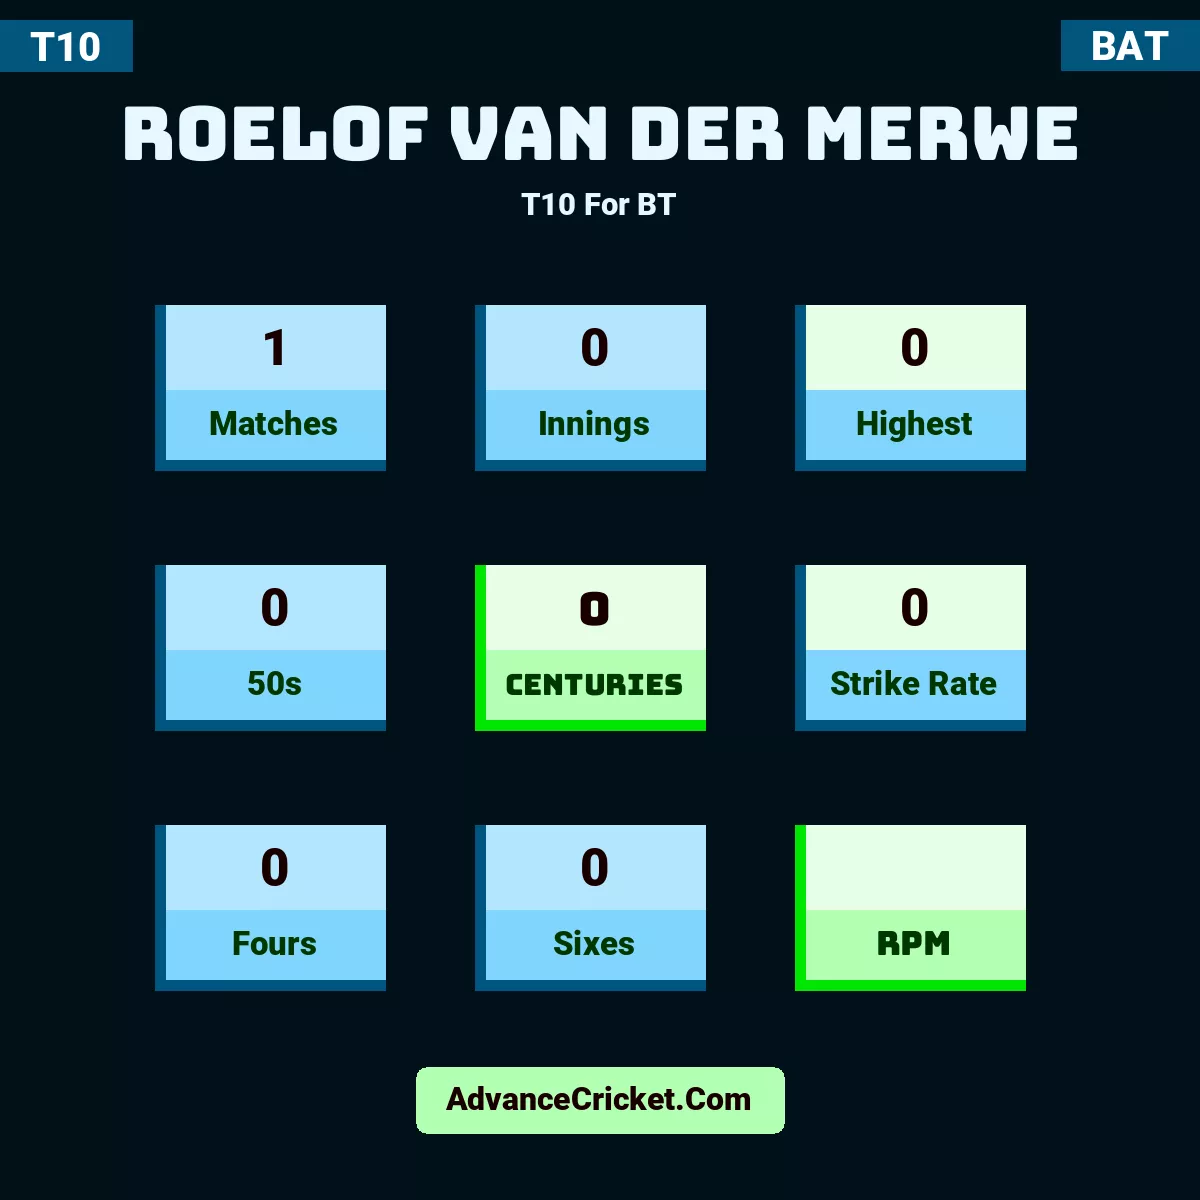 Roelof van der Merwe T10  For BT, Roelof van der Merwe played 1 matches, scored 0 runs as highest, 0 half-centuries, and 0 centuries, with a strike rate of 0. R.Merwe hit 0 fours and 0 sixes.